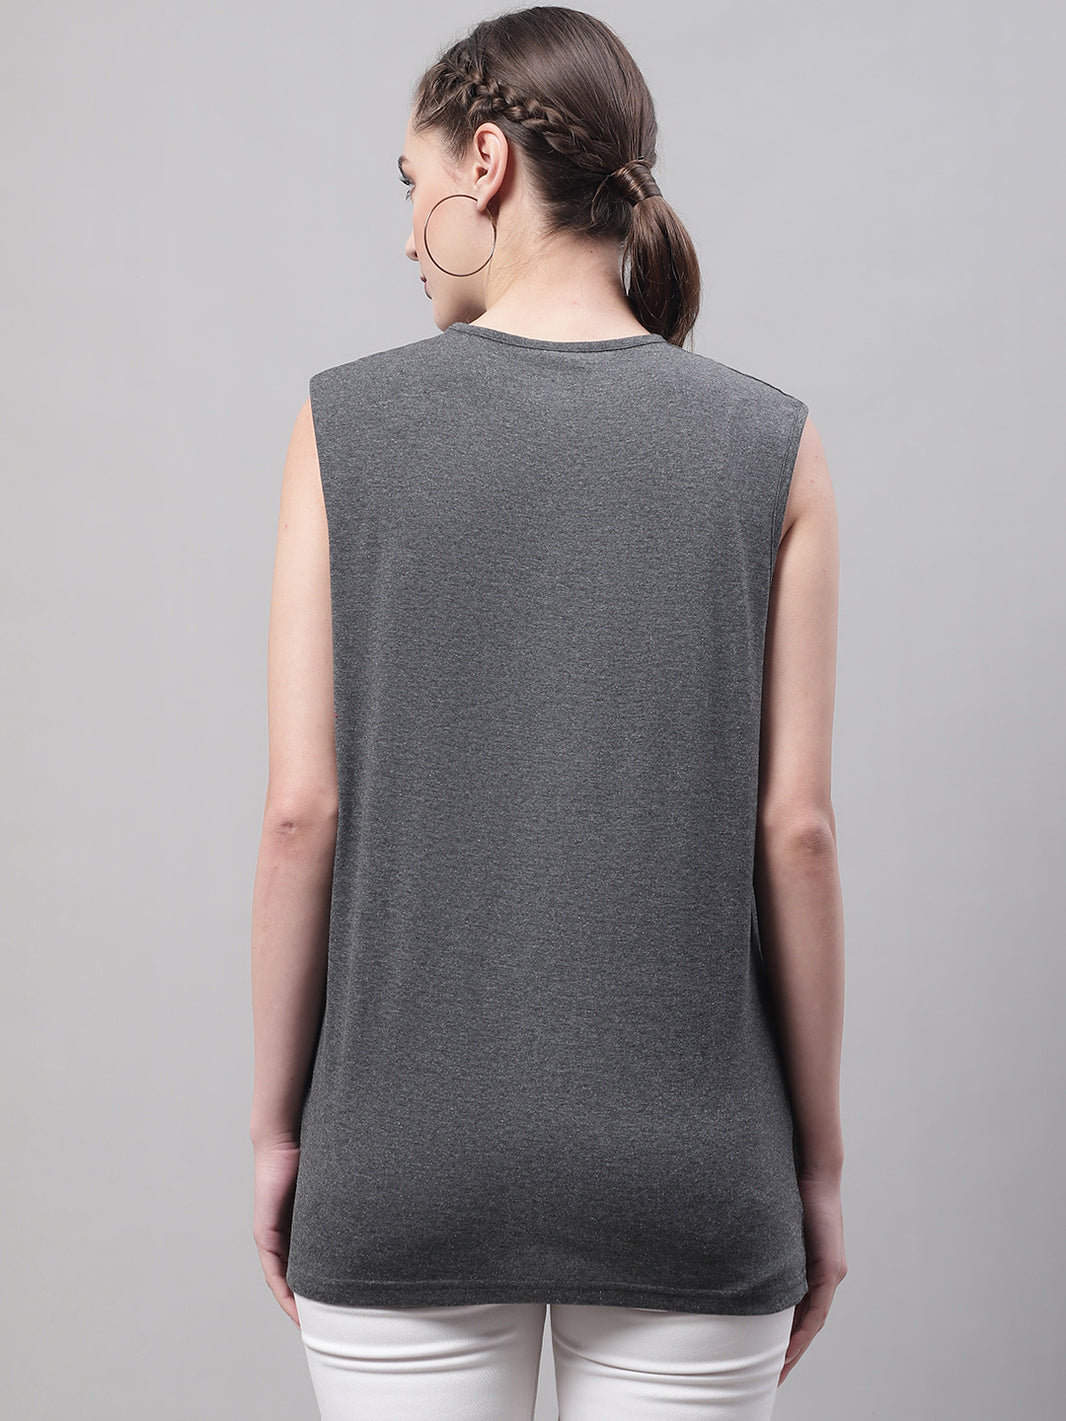 Vimal Jonney Regular Fit Cotton Solid Anthracite Gym Vest for Women